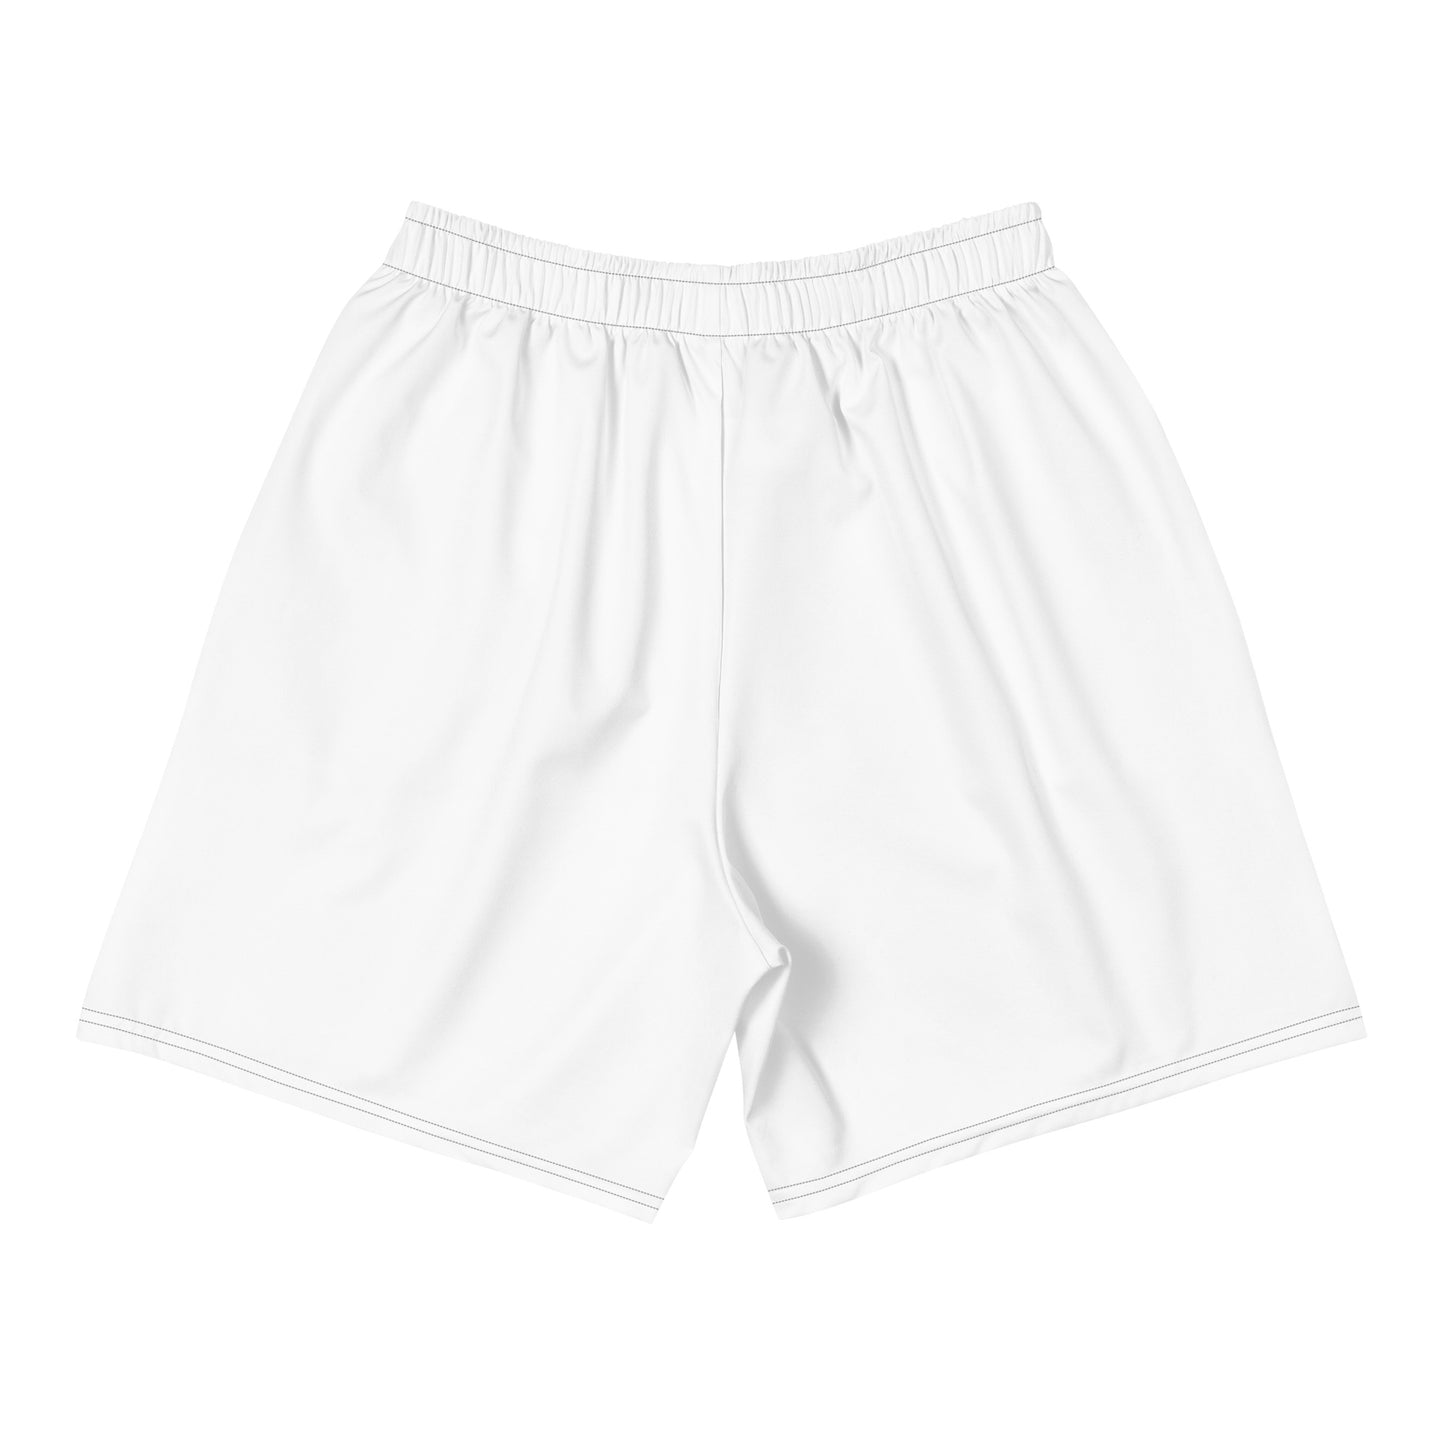 Jadenbree Men's Recycled White Athletic Shorts